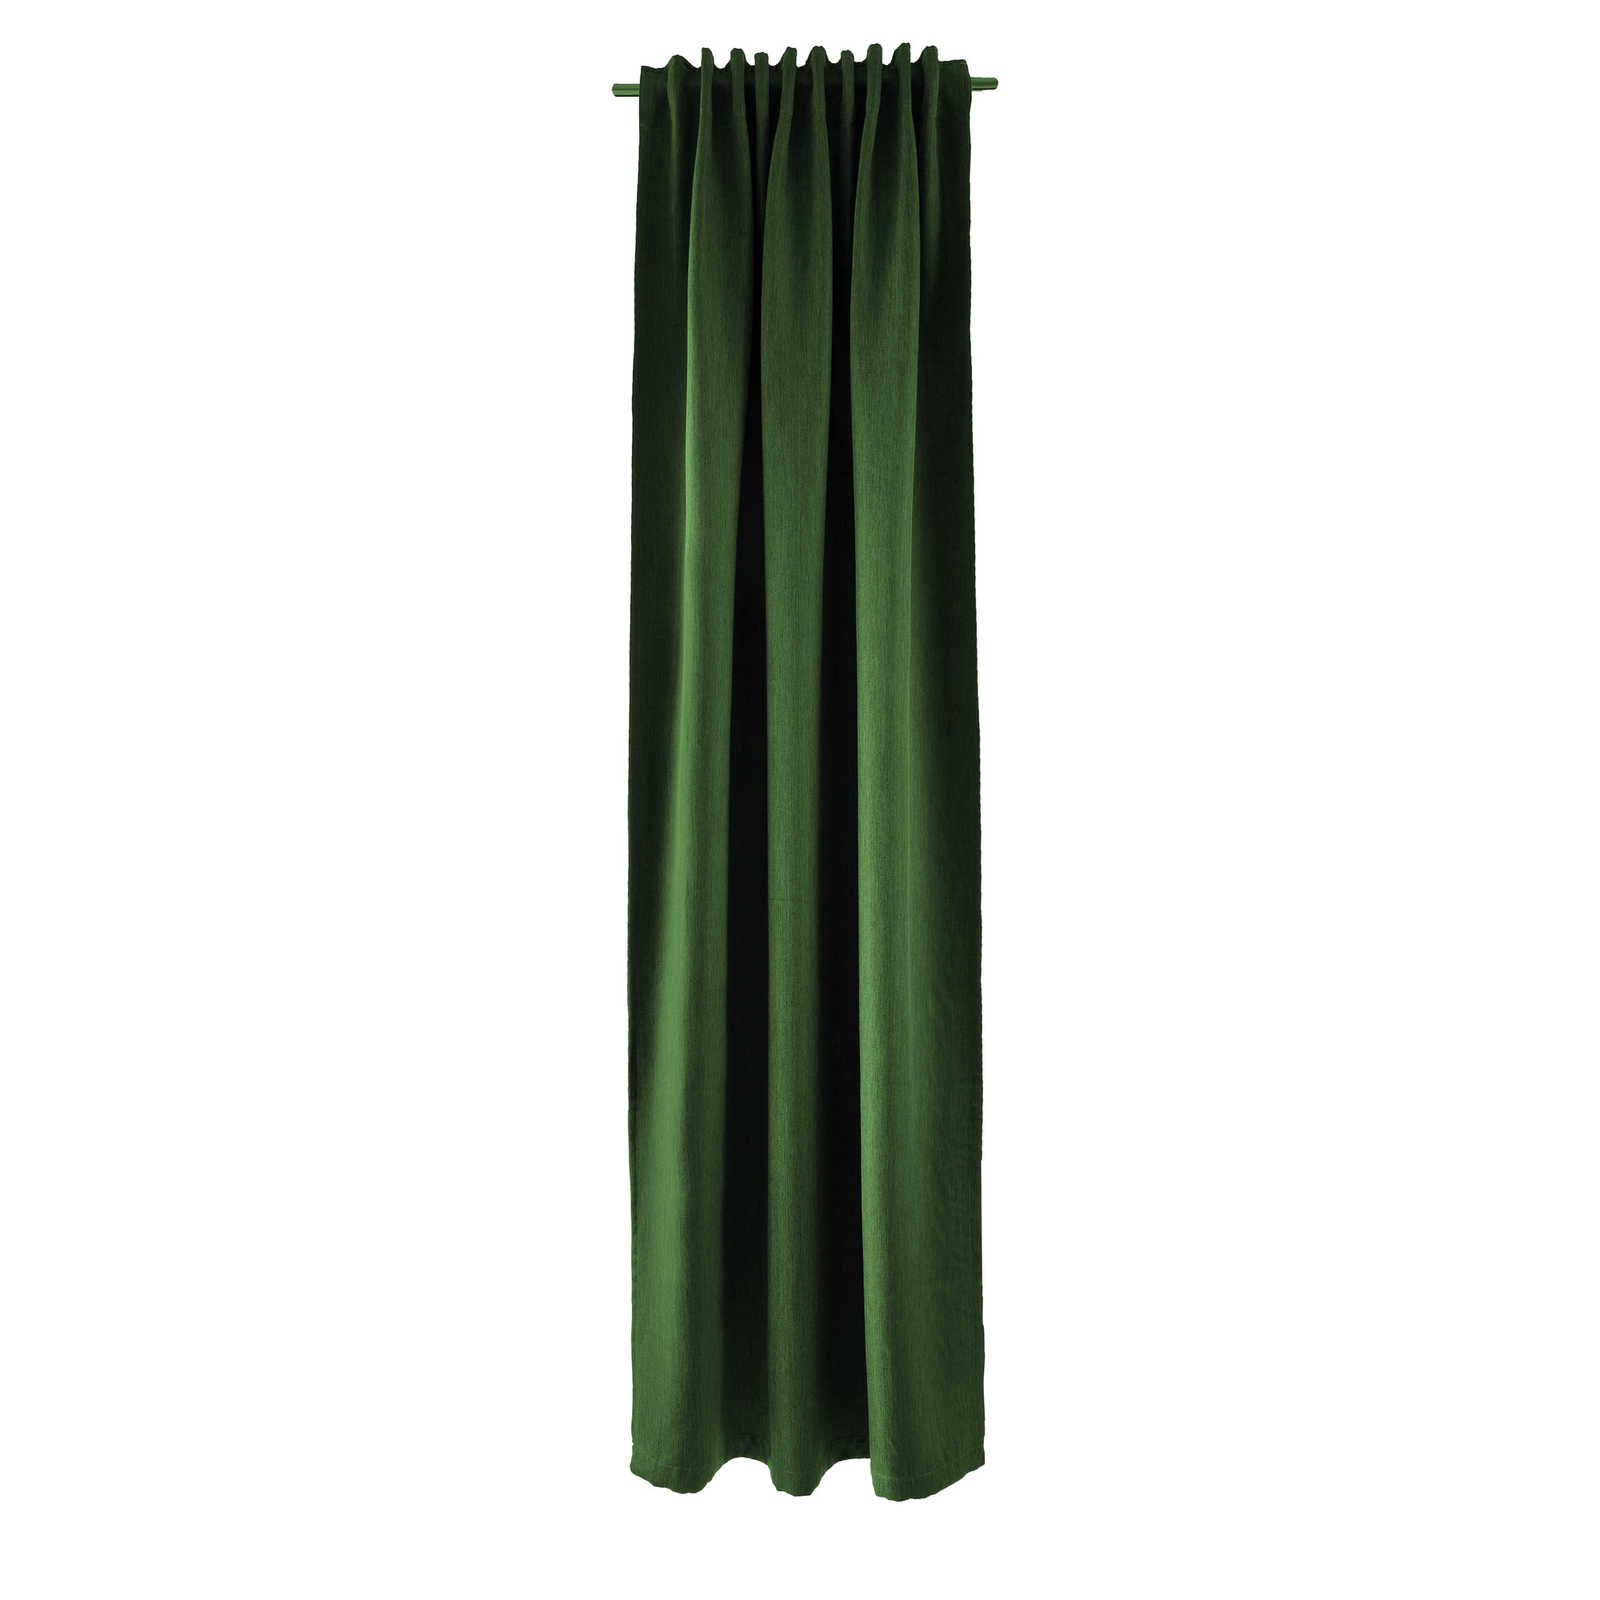 Foulard decorativo 140 cm x 245 cm in fibra artificiale verde scuro
